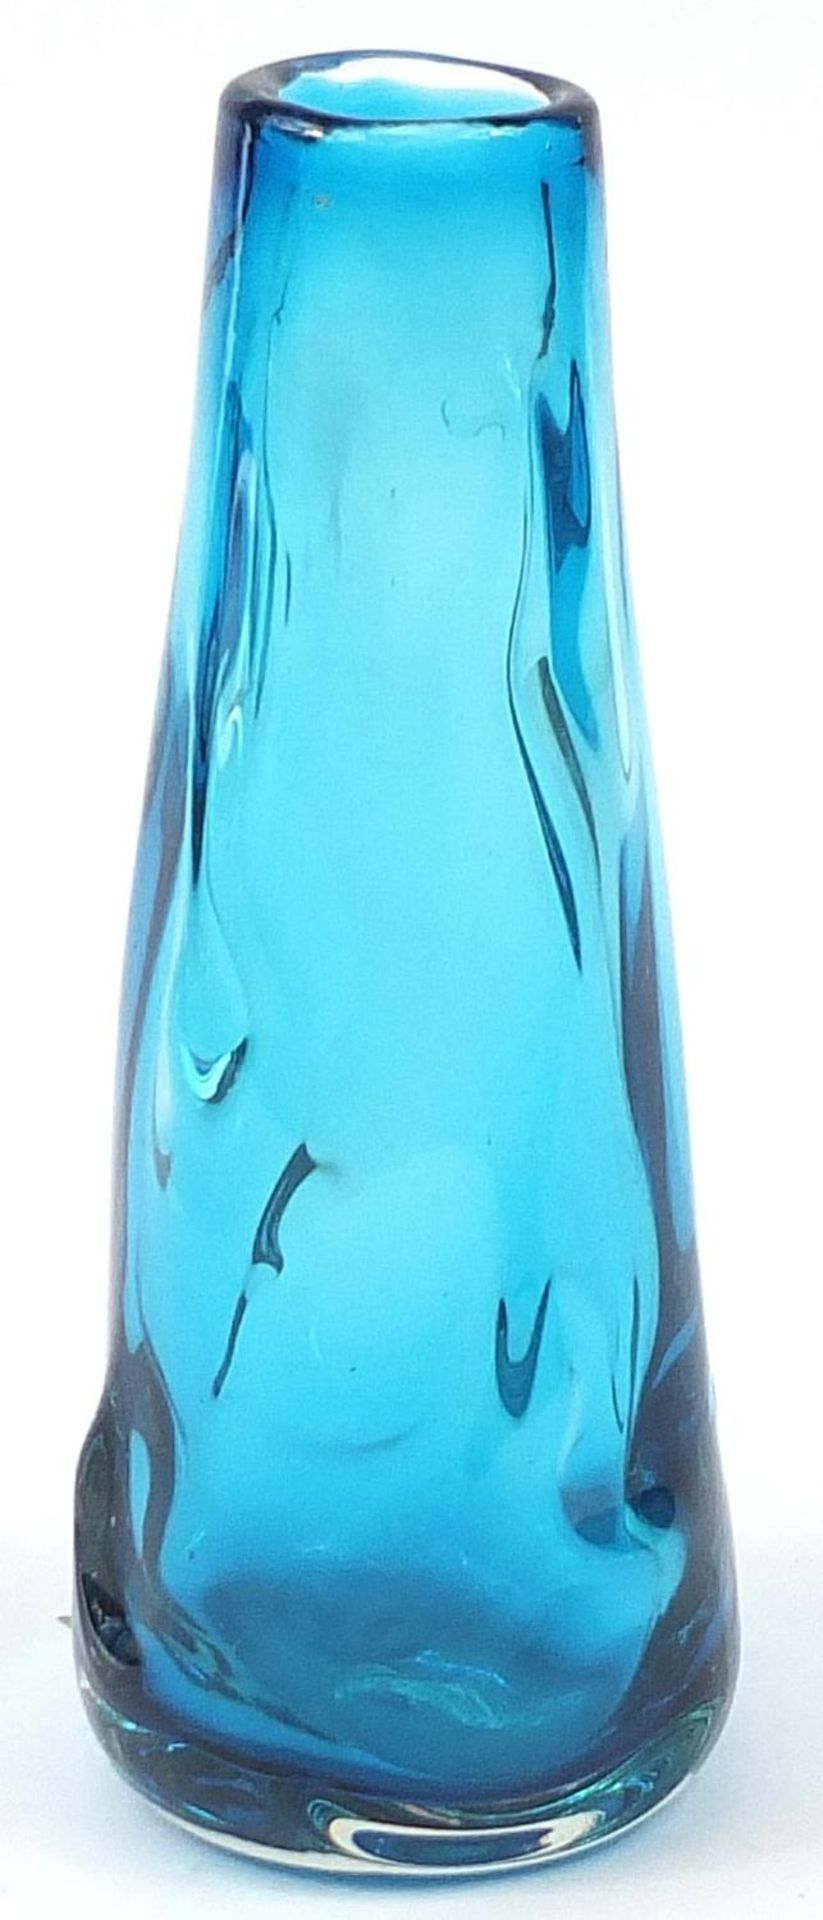 Whitefriars aqua blue knobbly glass vase, 25cm high